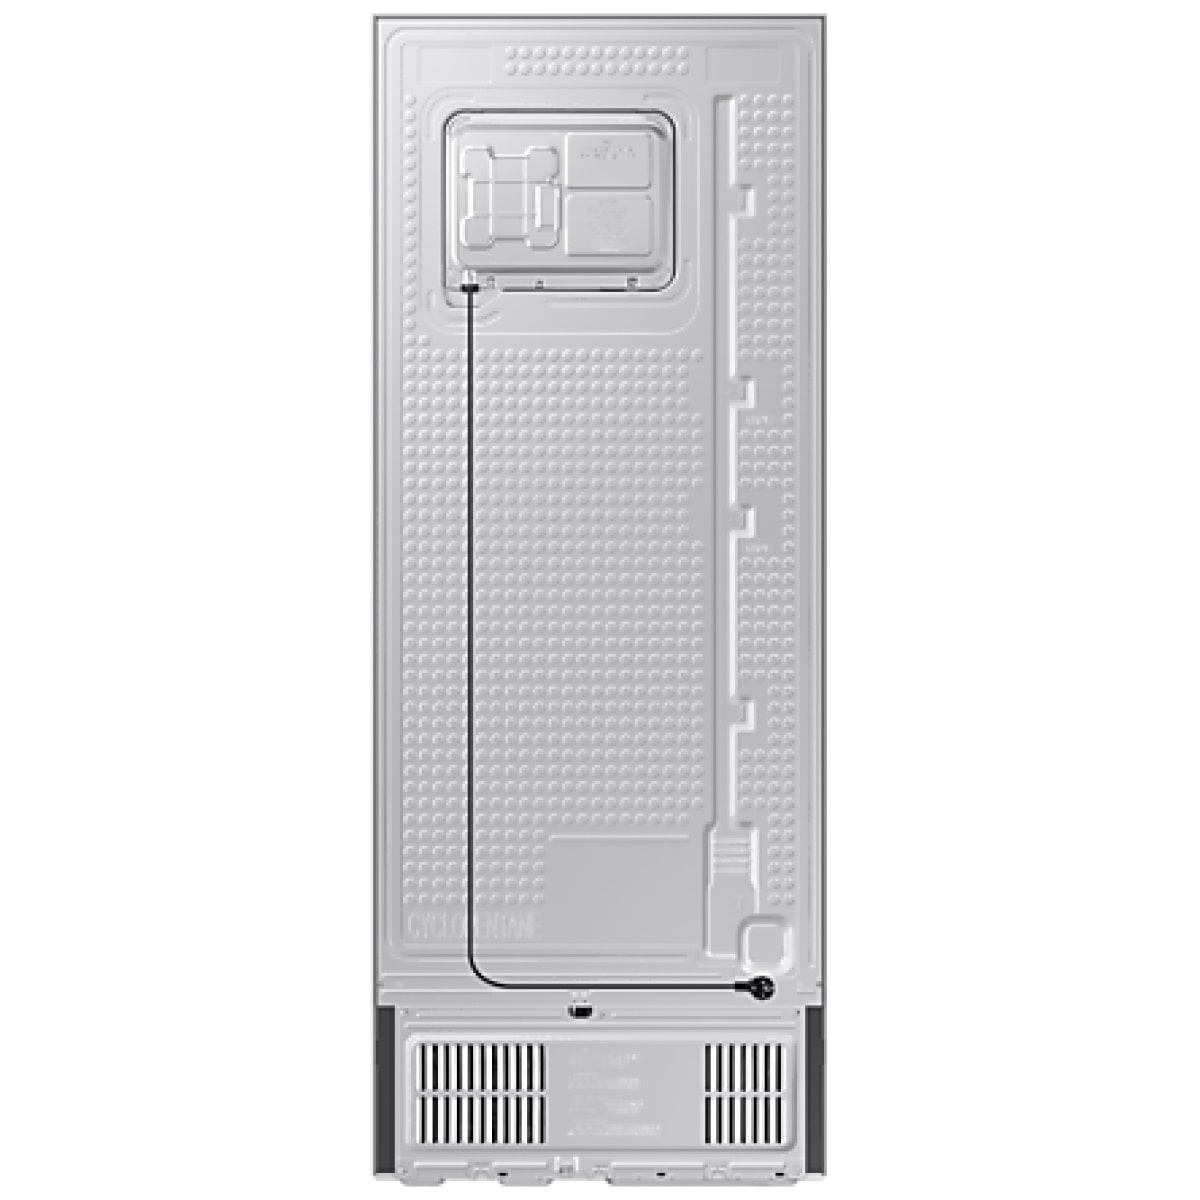 Samsung Top Mount Freezer Refrigerator with Bespoke Design